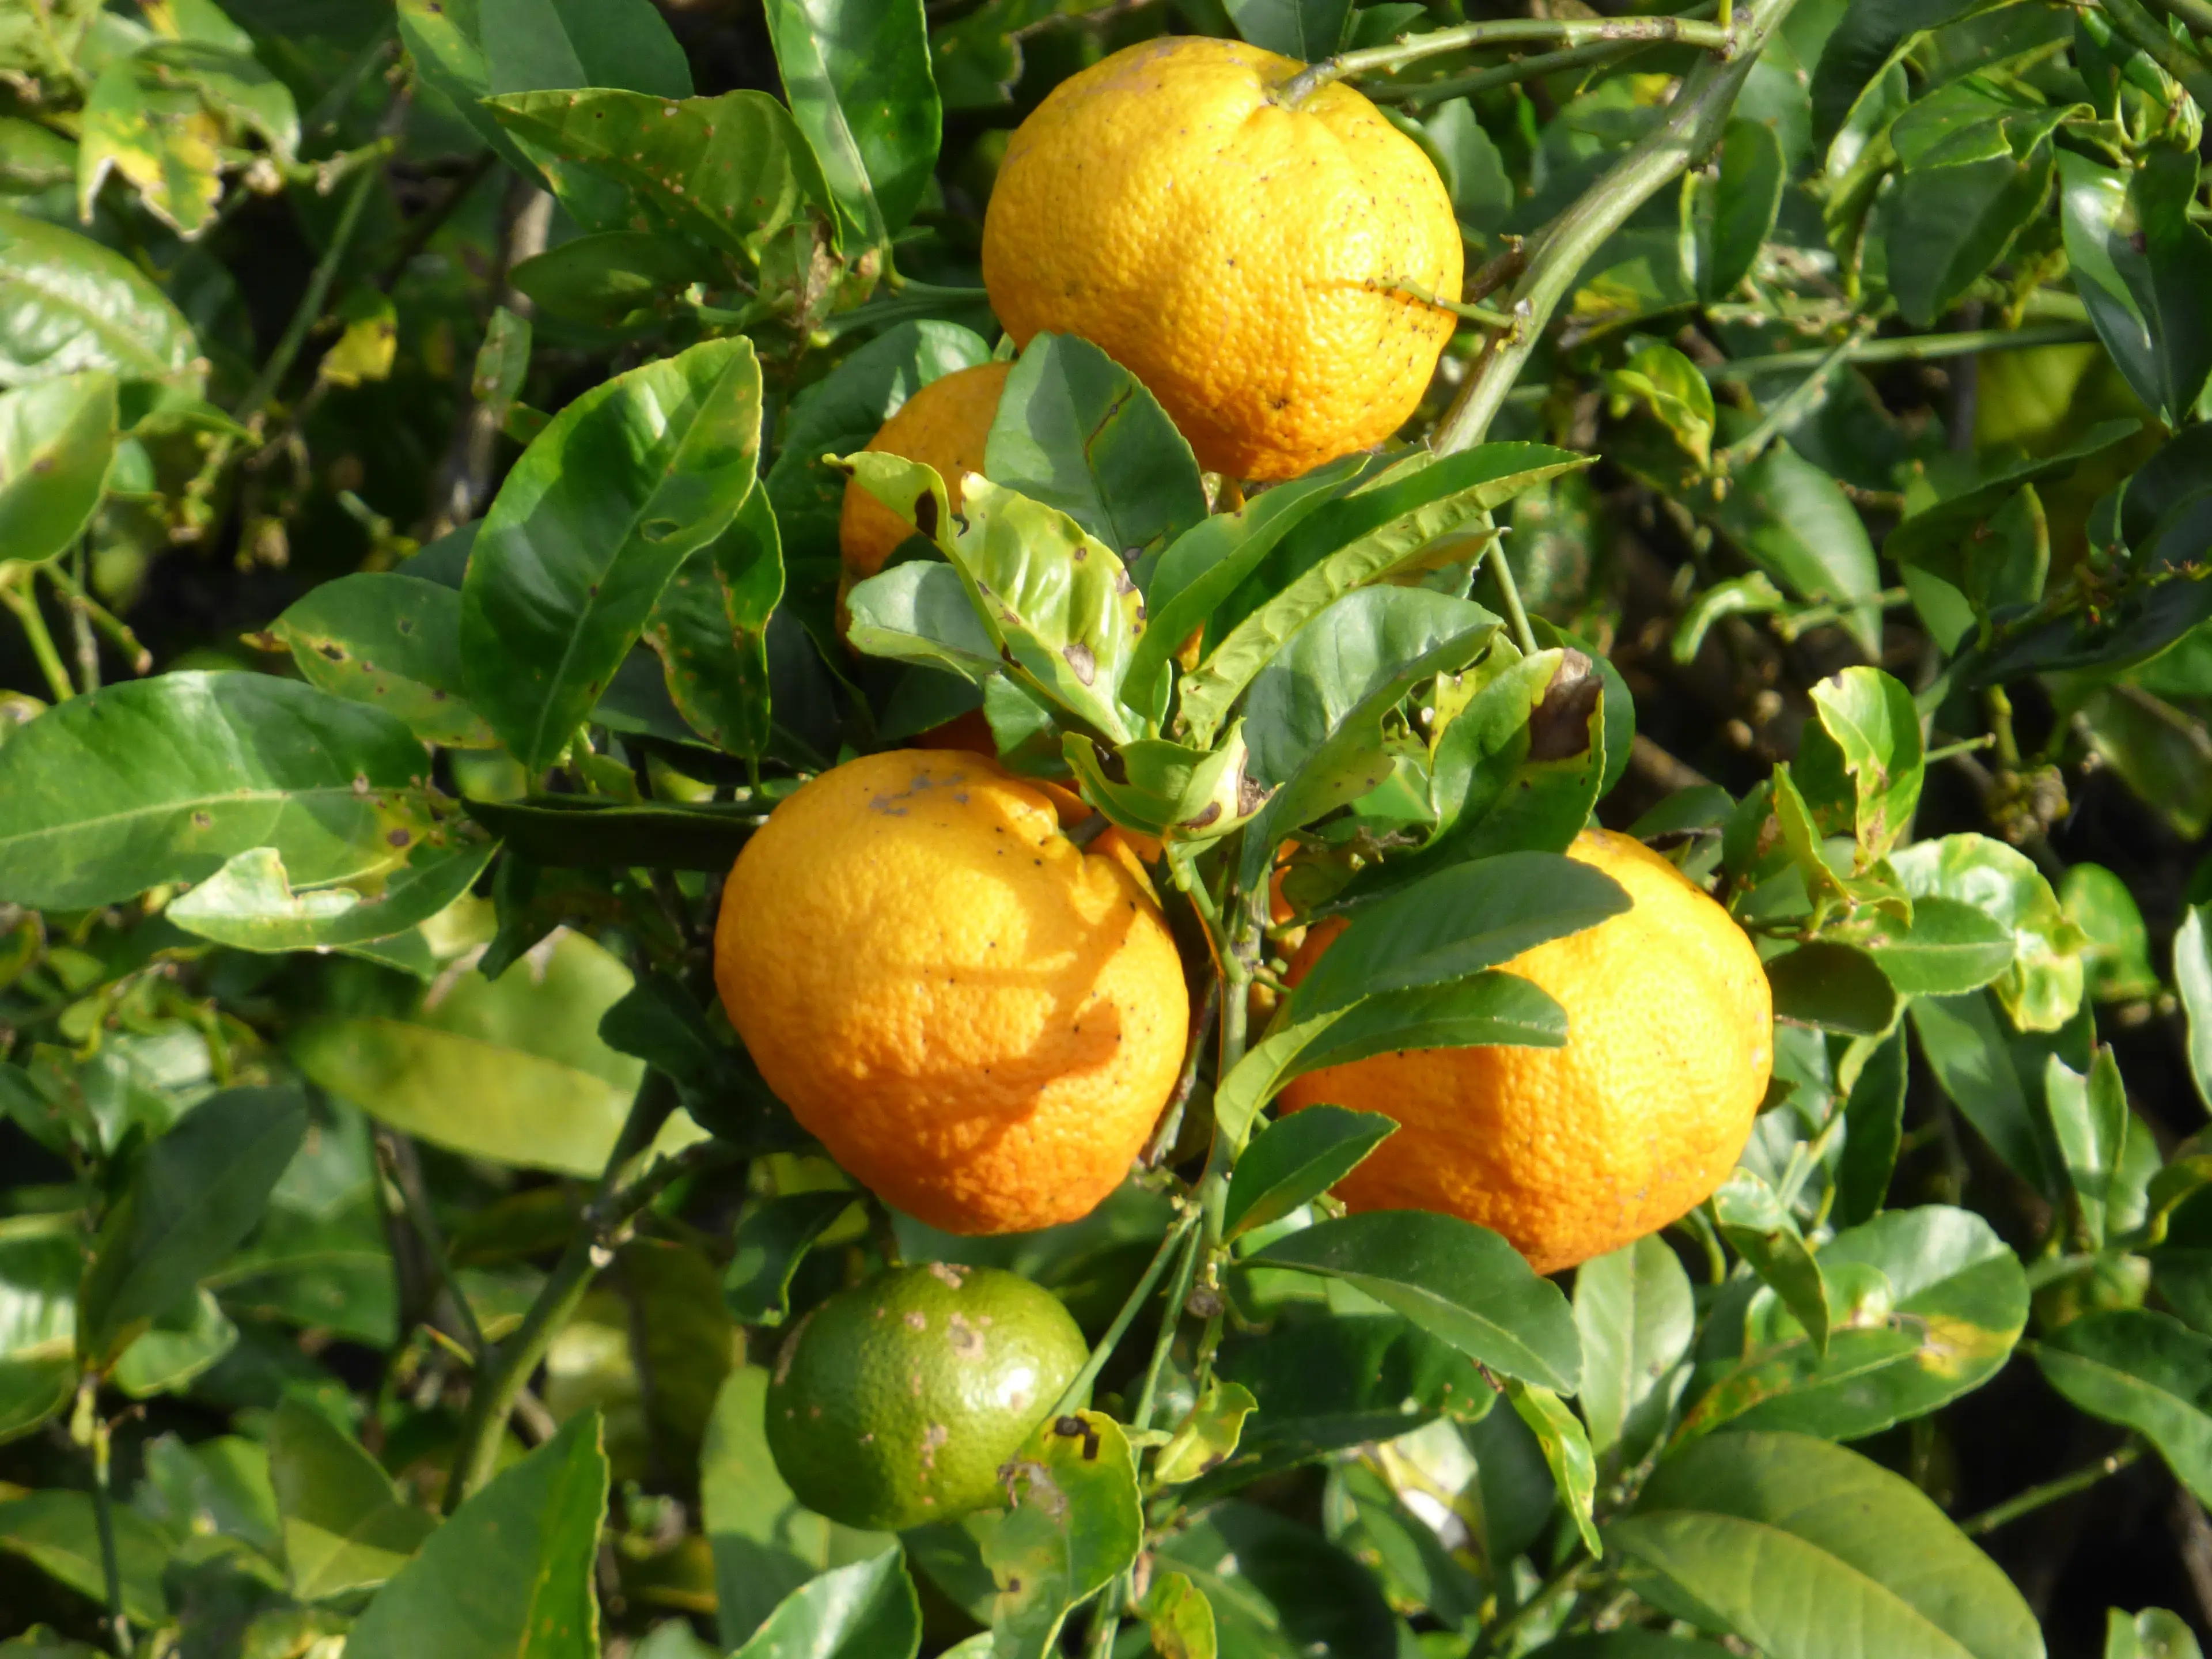 Limón Mandarino